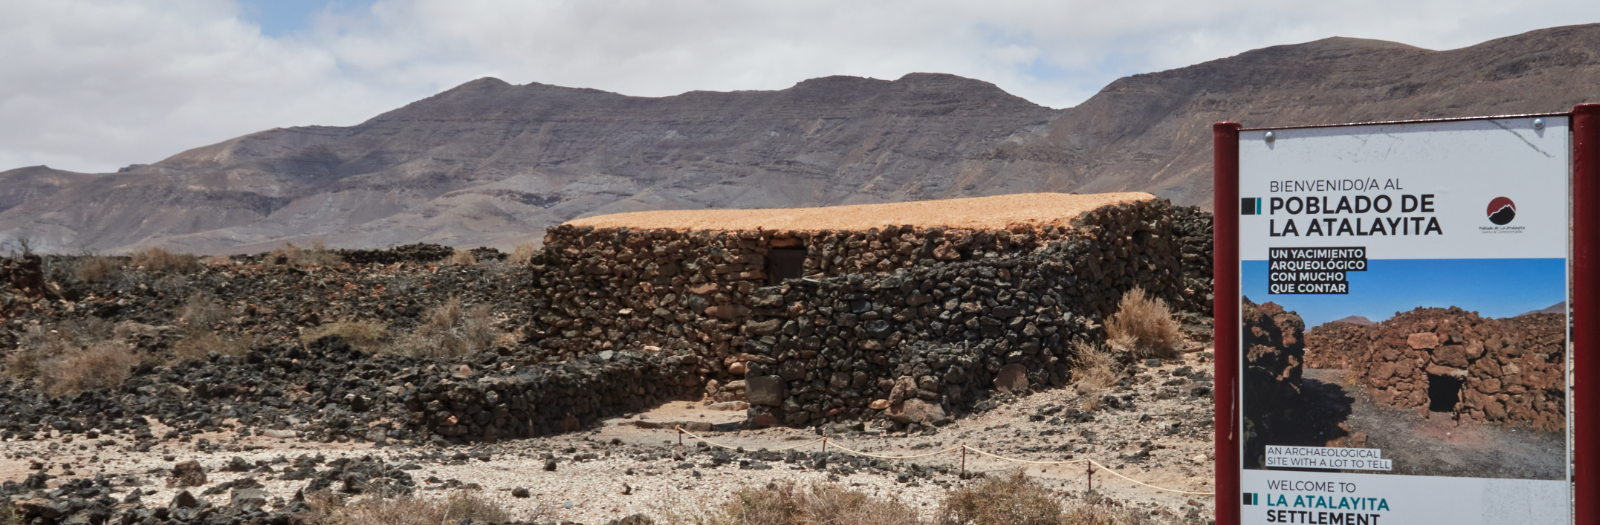 Poblado de la Atalayita Pozo Negro Fuerteventura.